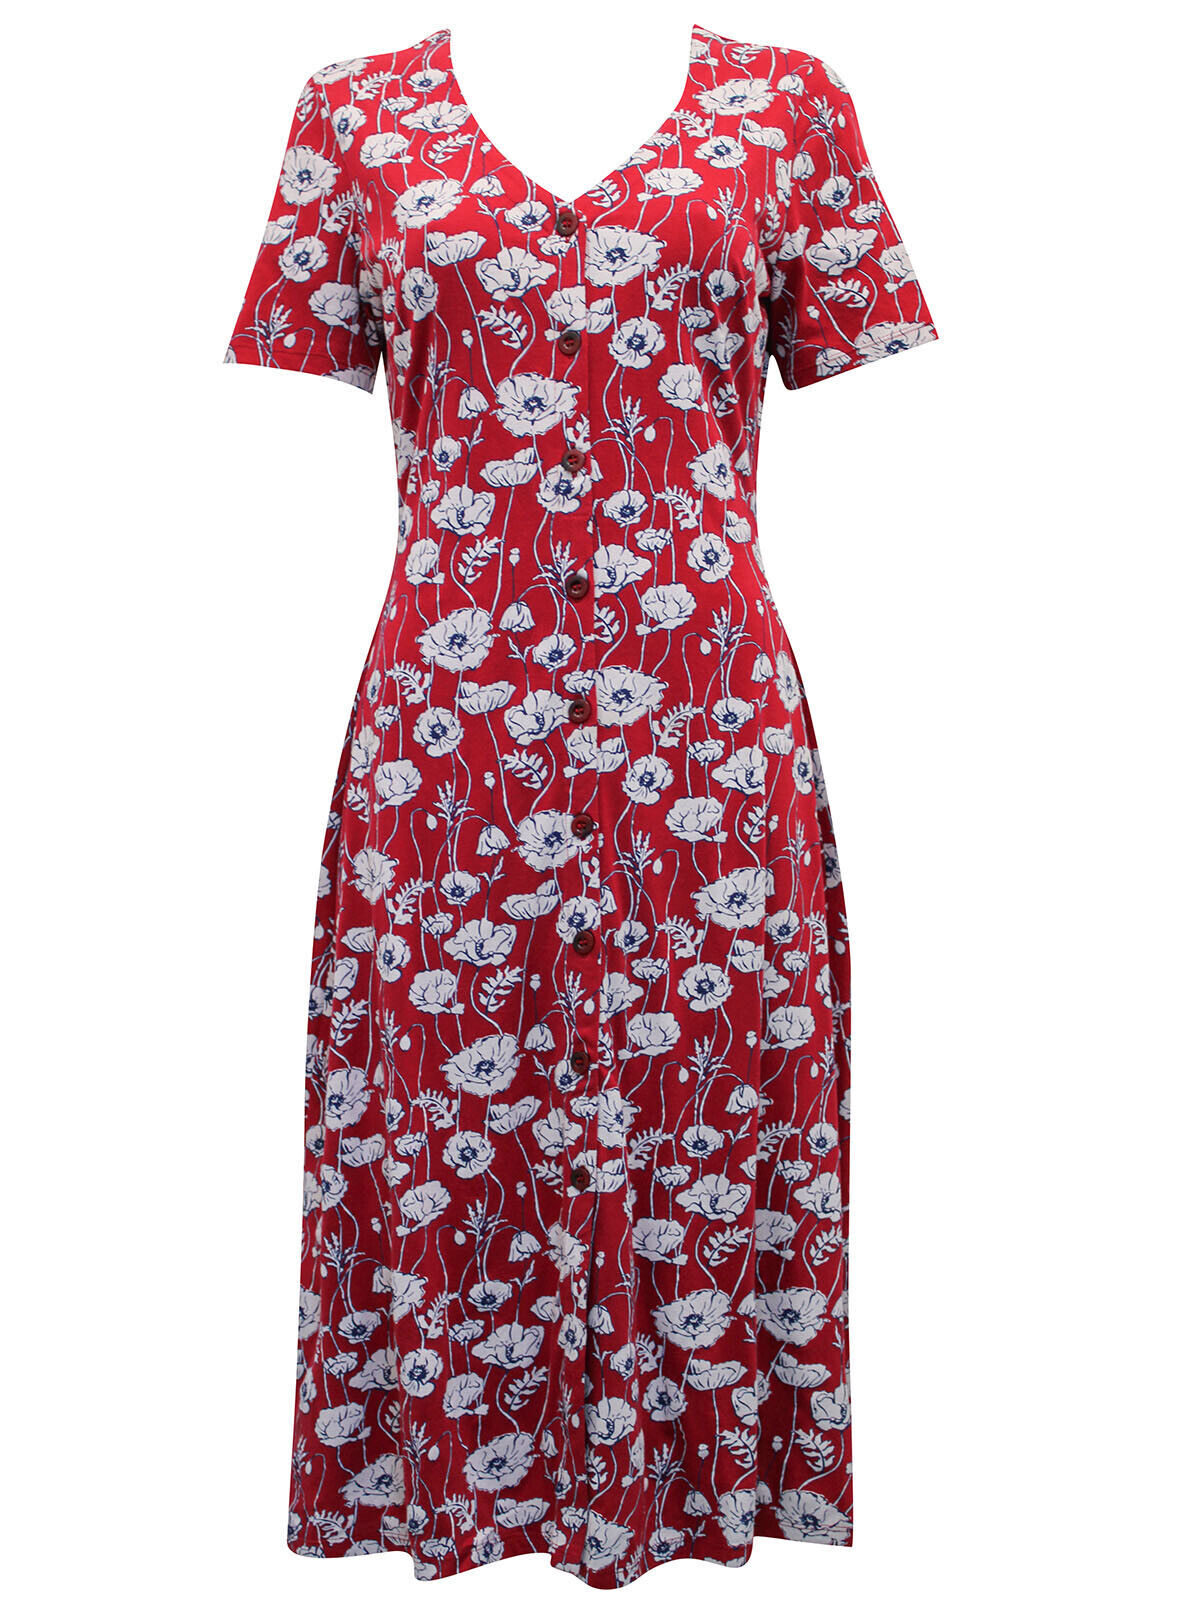 EX Seasalt Red Linear Poppy Rudder Lilian Tea Dress 8 10 12 14 16 18 20 RRP £60